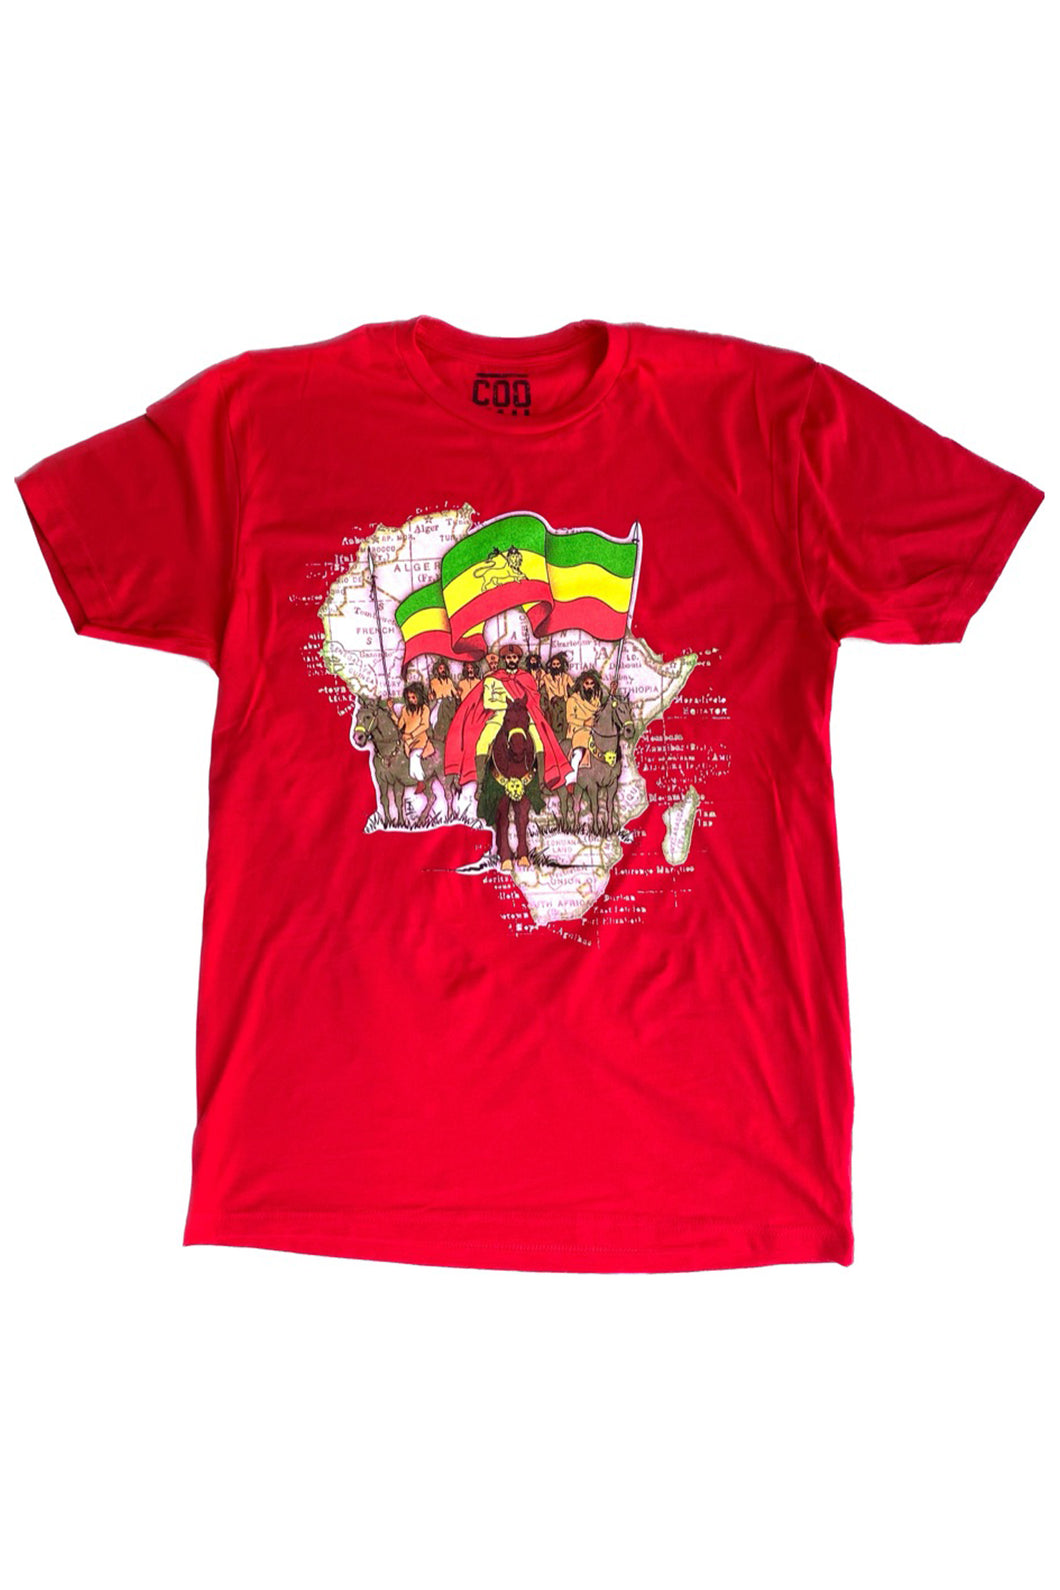 Cooyah Haile Selassie i Rastafari graphic tee in red